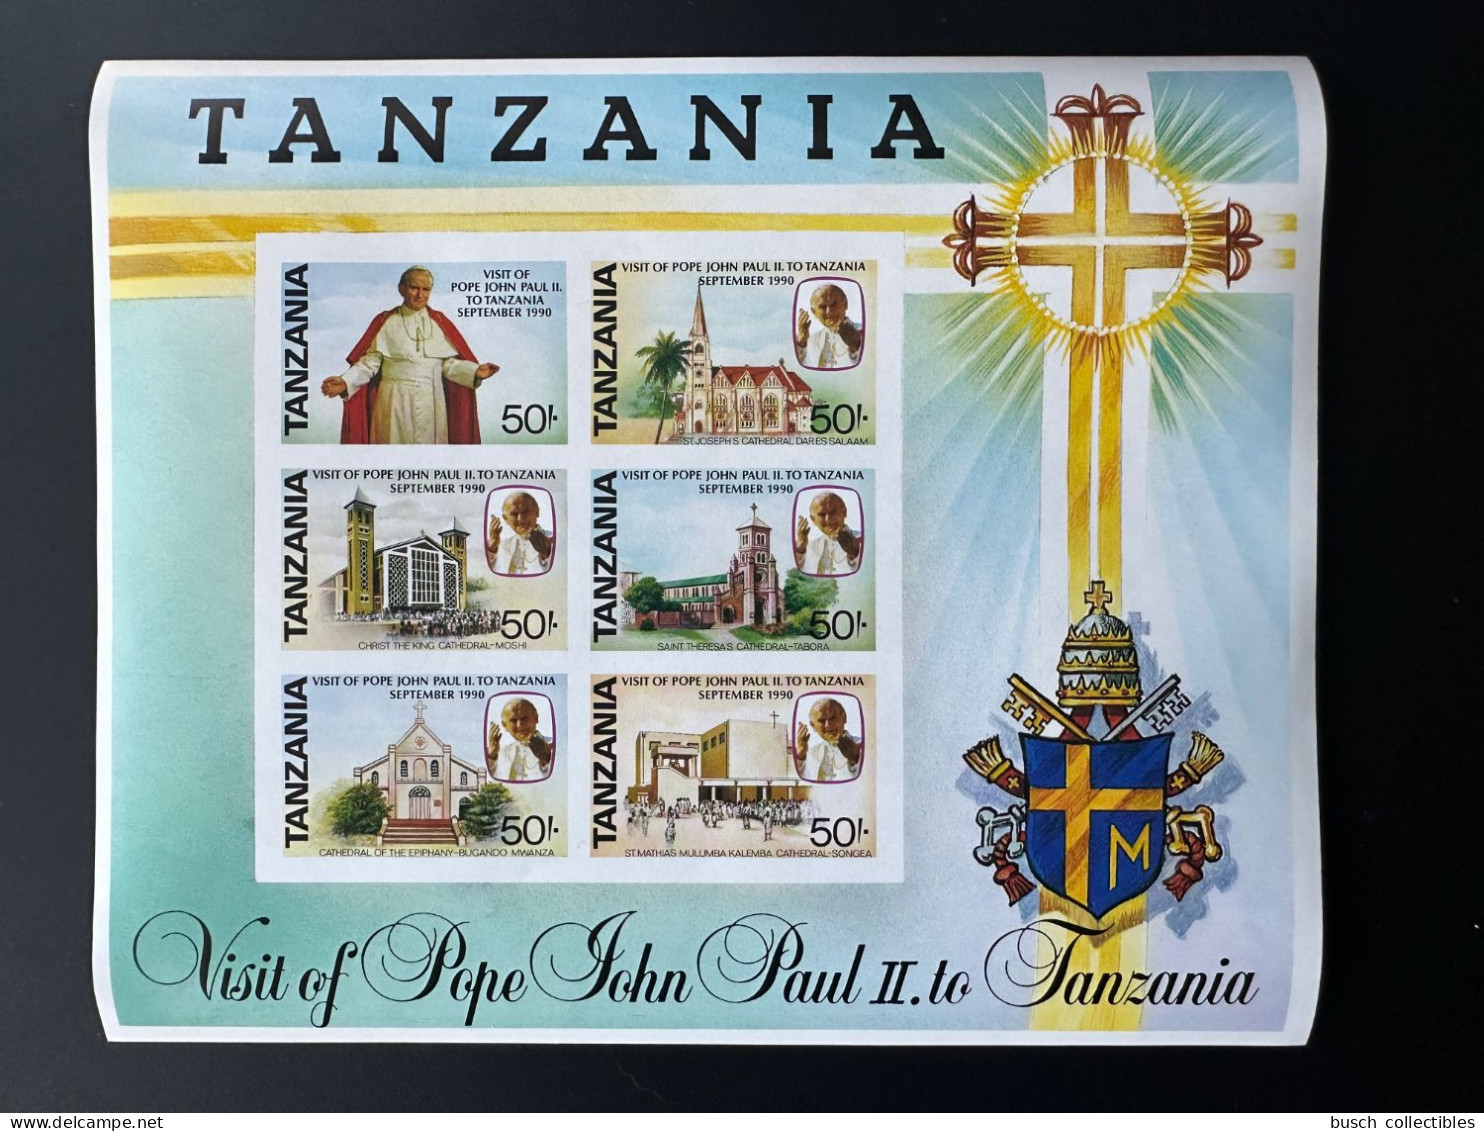 Tanzania 1990 Mi. Bl. 121 IMPERF ND Pape Jean-Paul II Papst Johannes Paul Pope John Paul - Popes